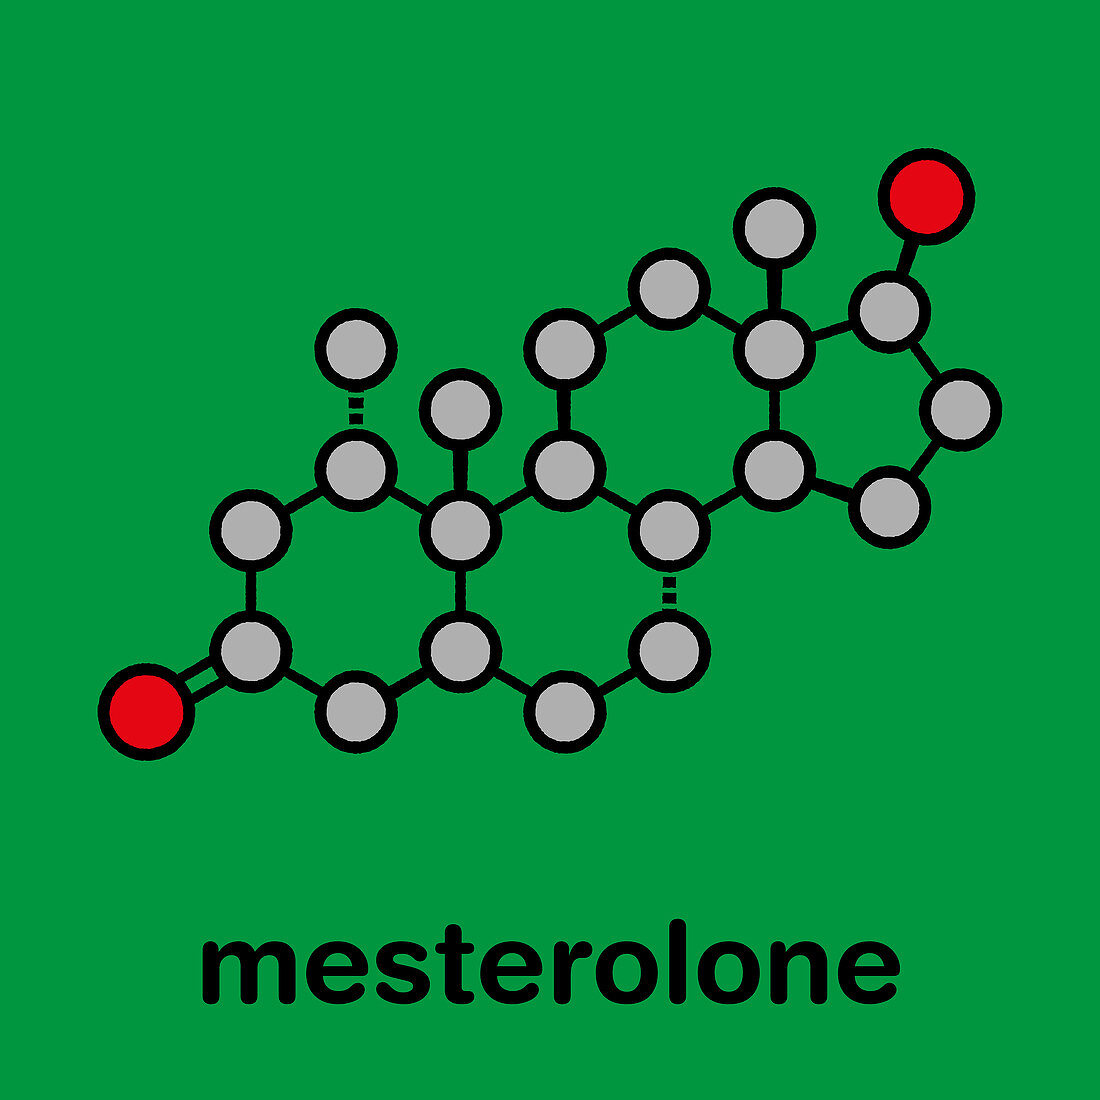 Mesterolone androgen molecule, illustration